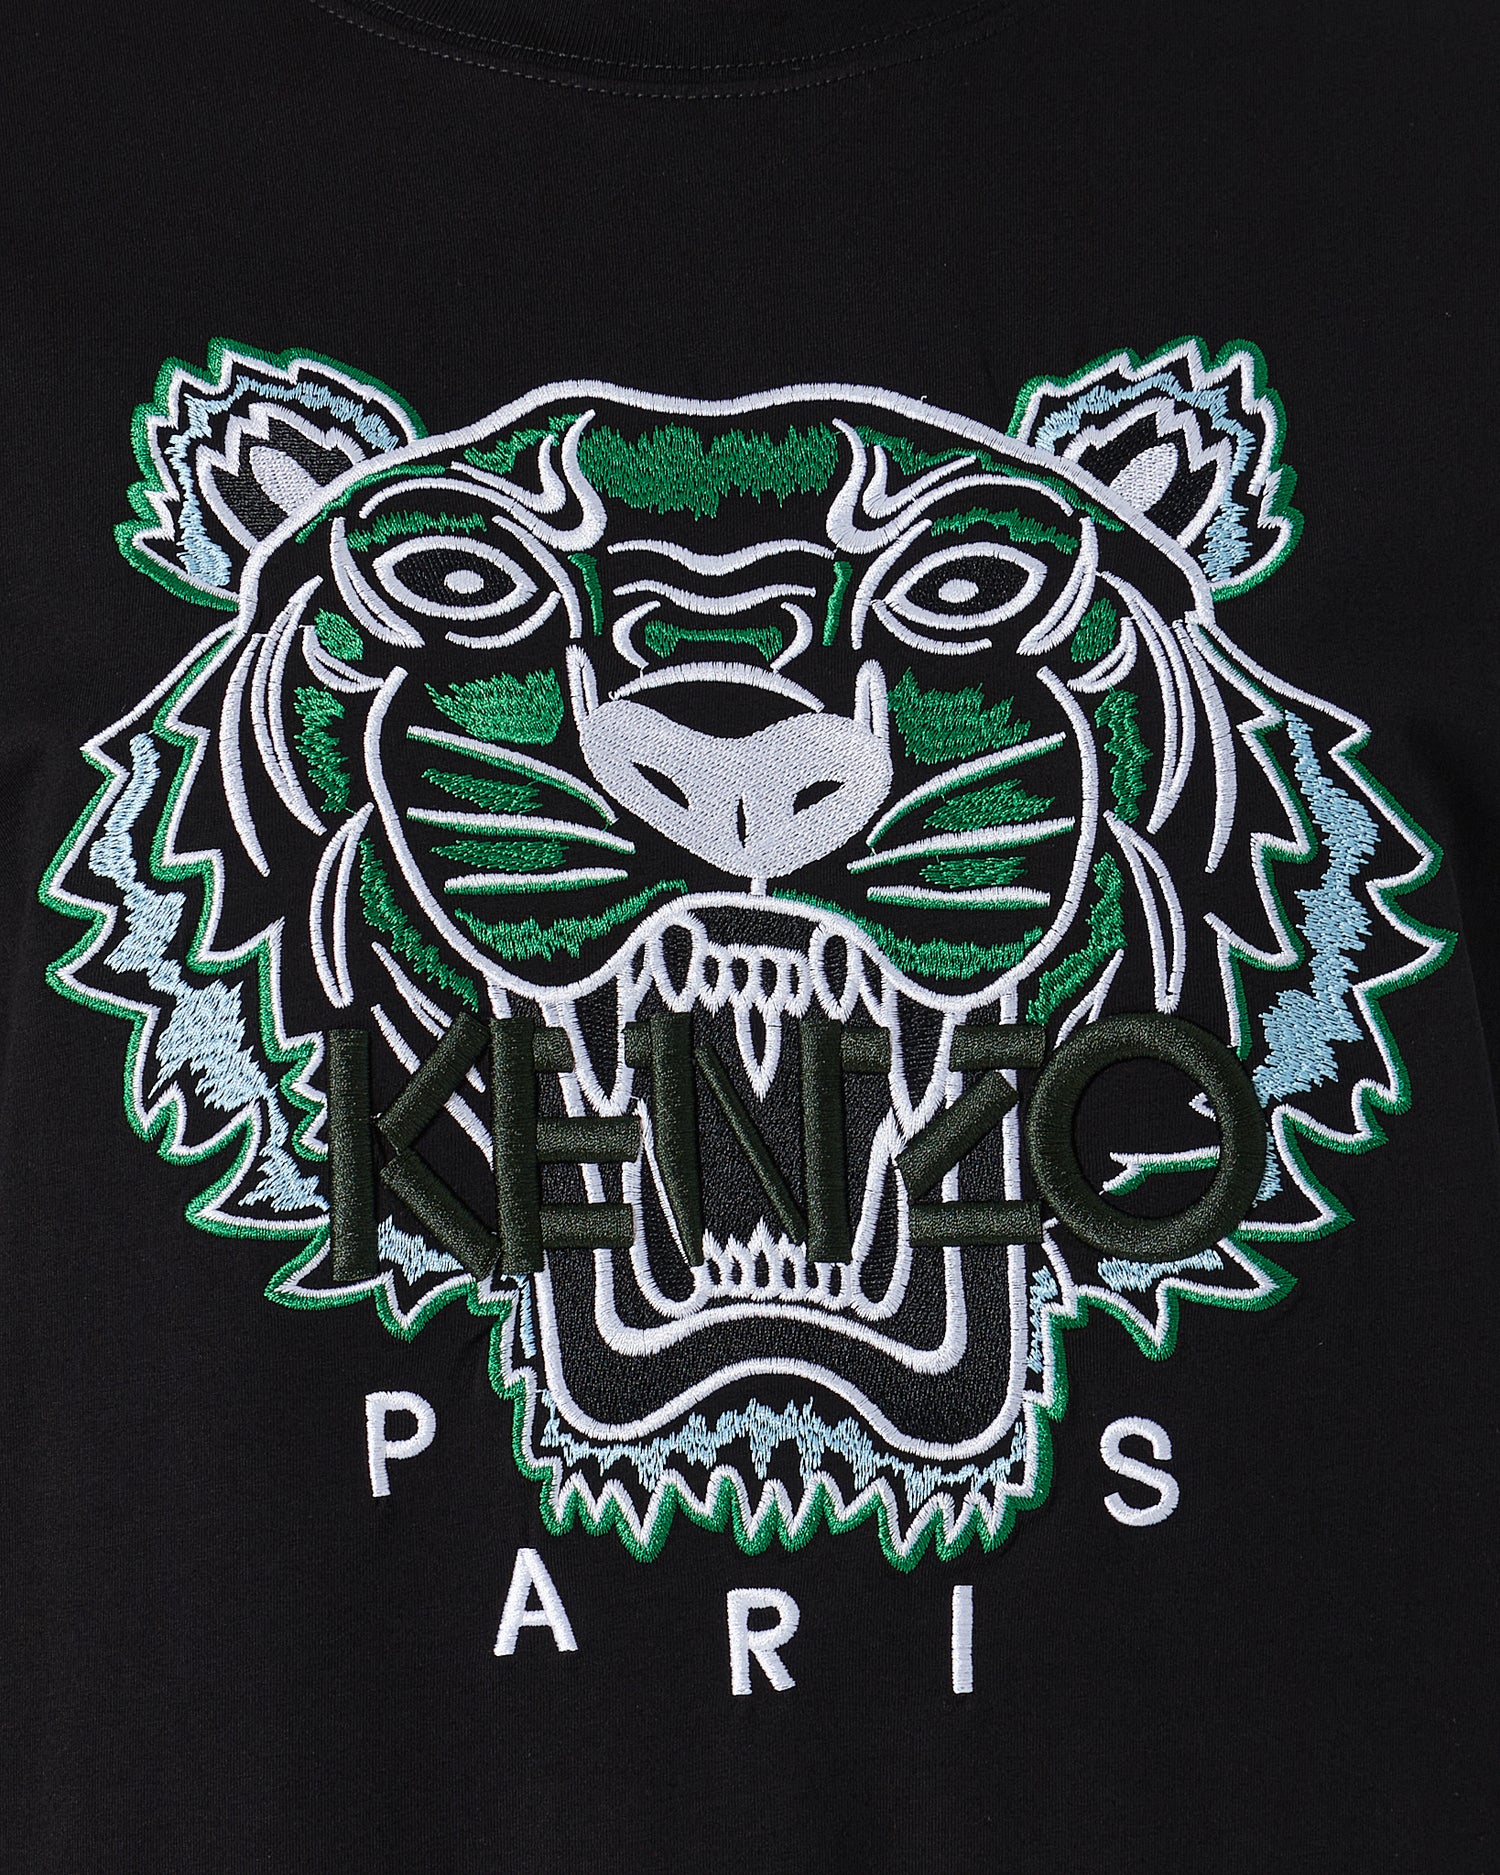 KEN Tiger Head Green Embroidered Unisex Black T-Shirt 23.90